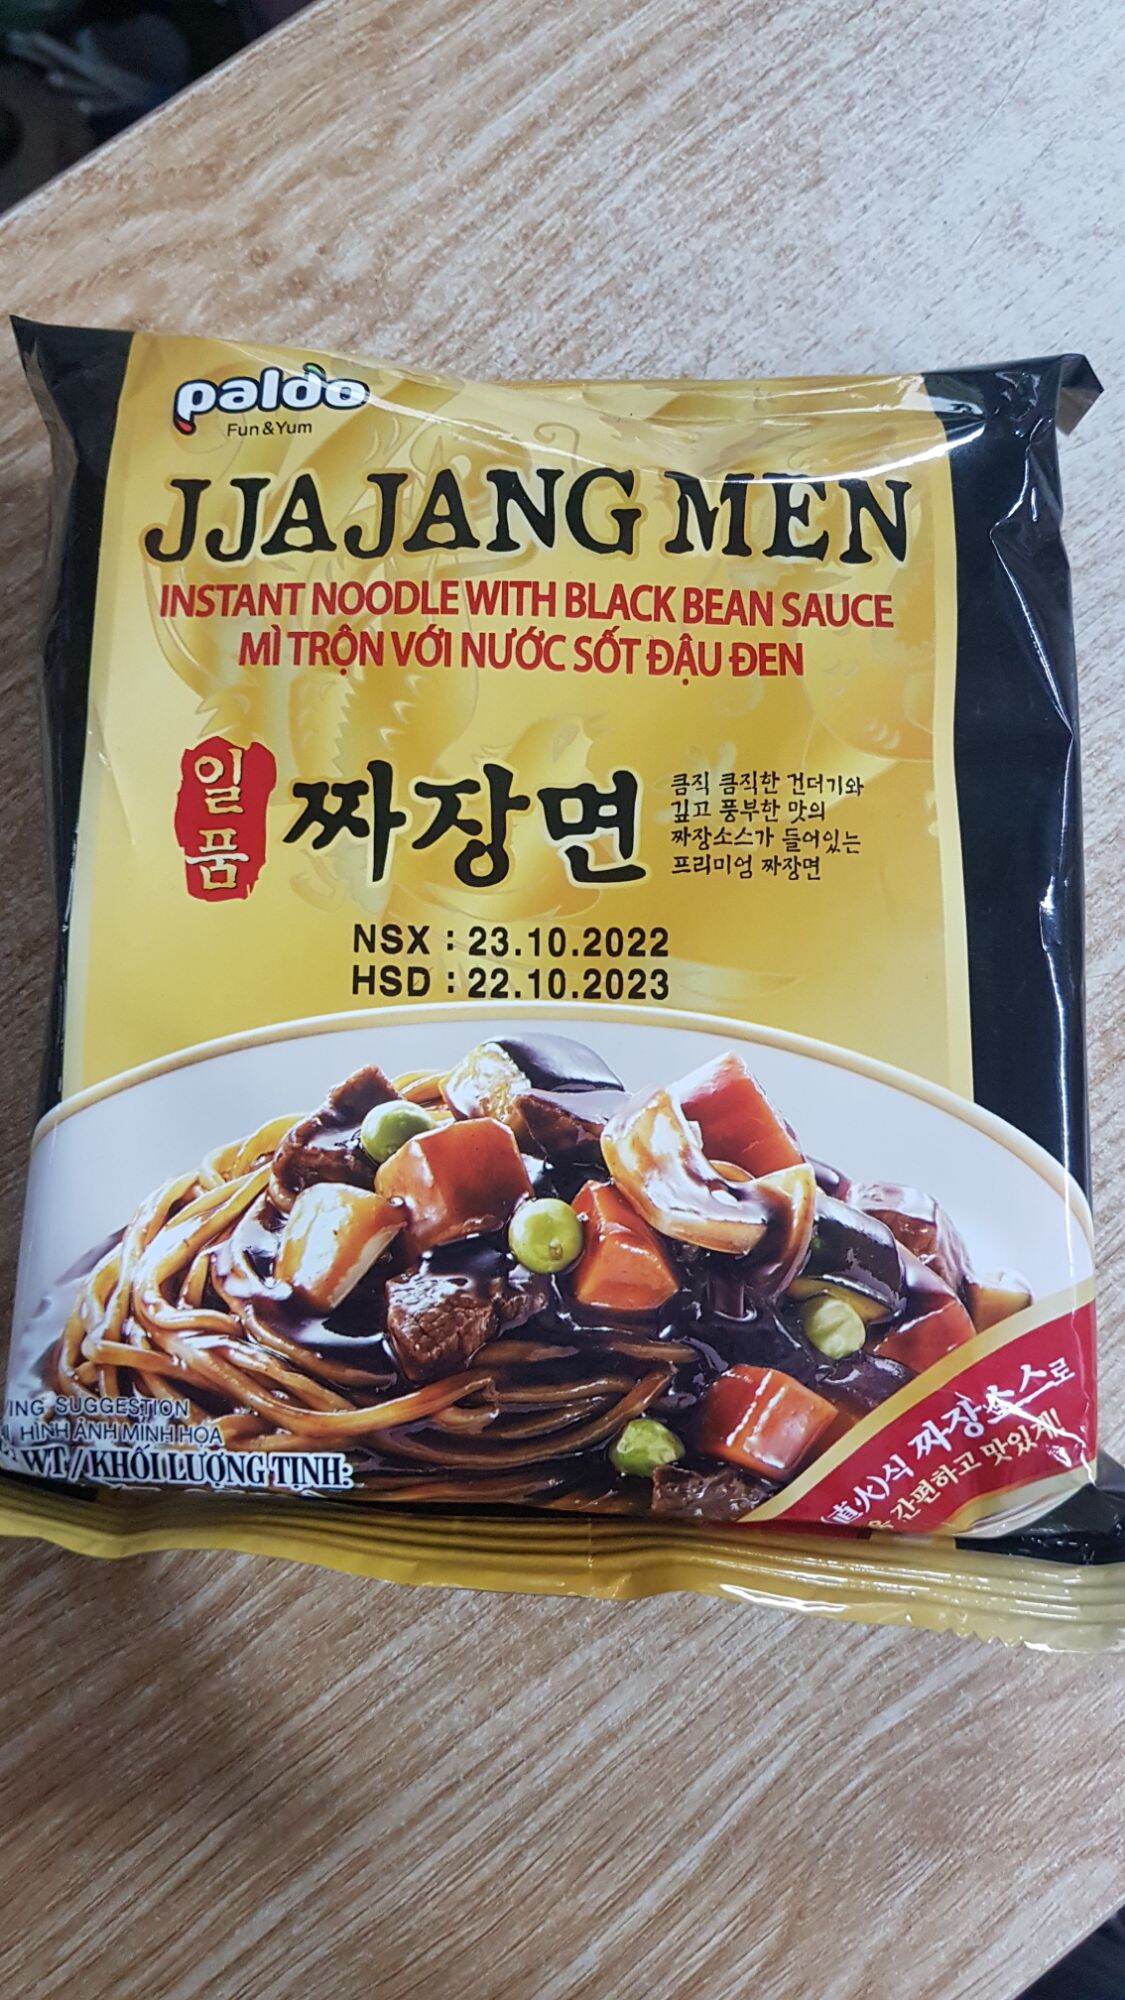 Mỳ tương đen Jjajangmen Paldo Gói 200g